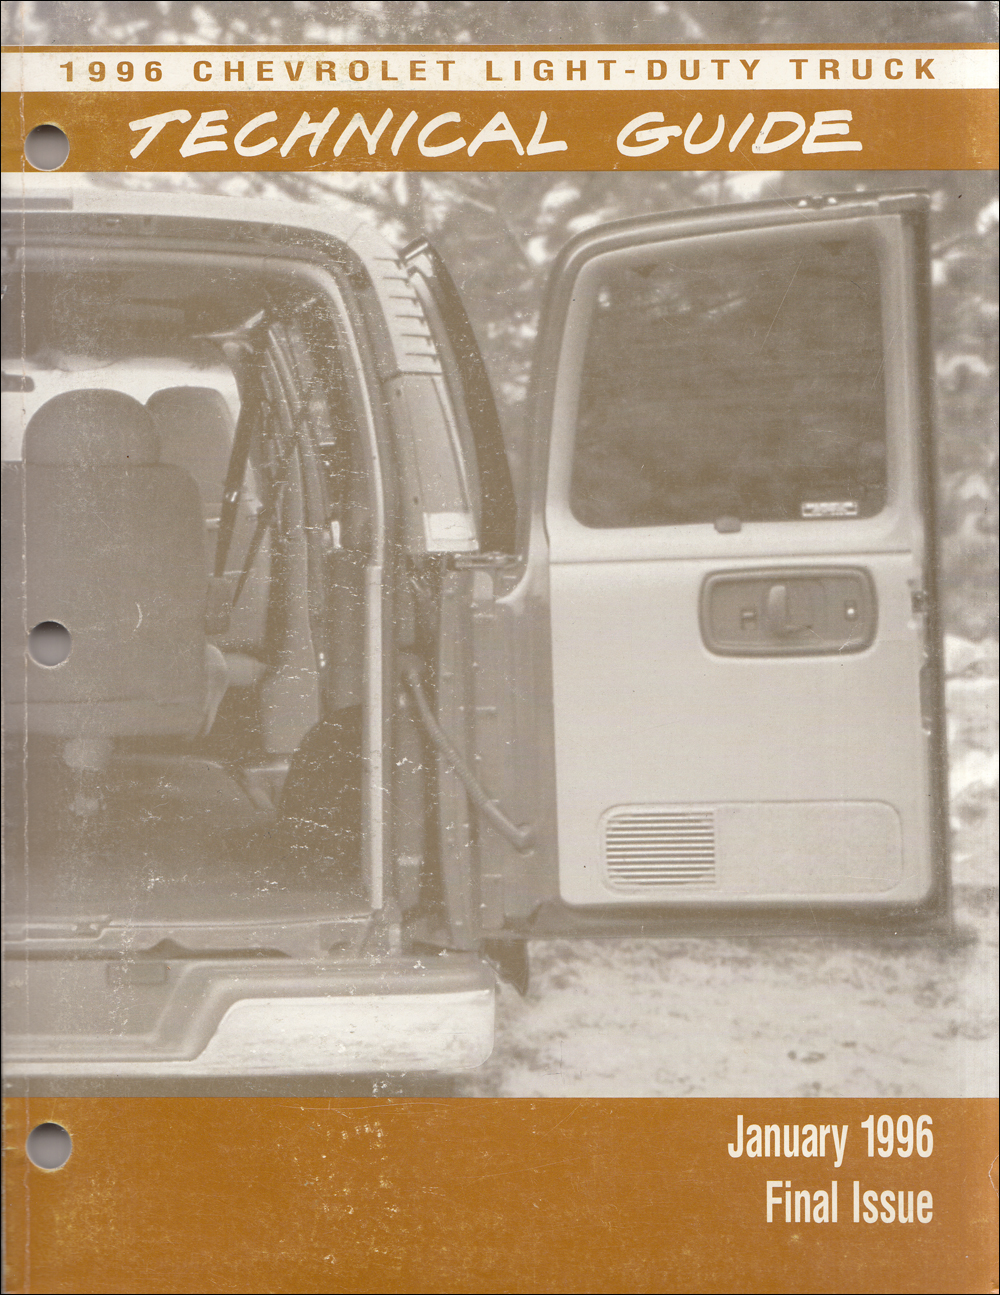 1996 Chevrolet Truck Technical Guide Dealer Album Original Final Issue